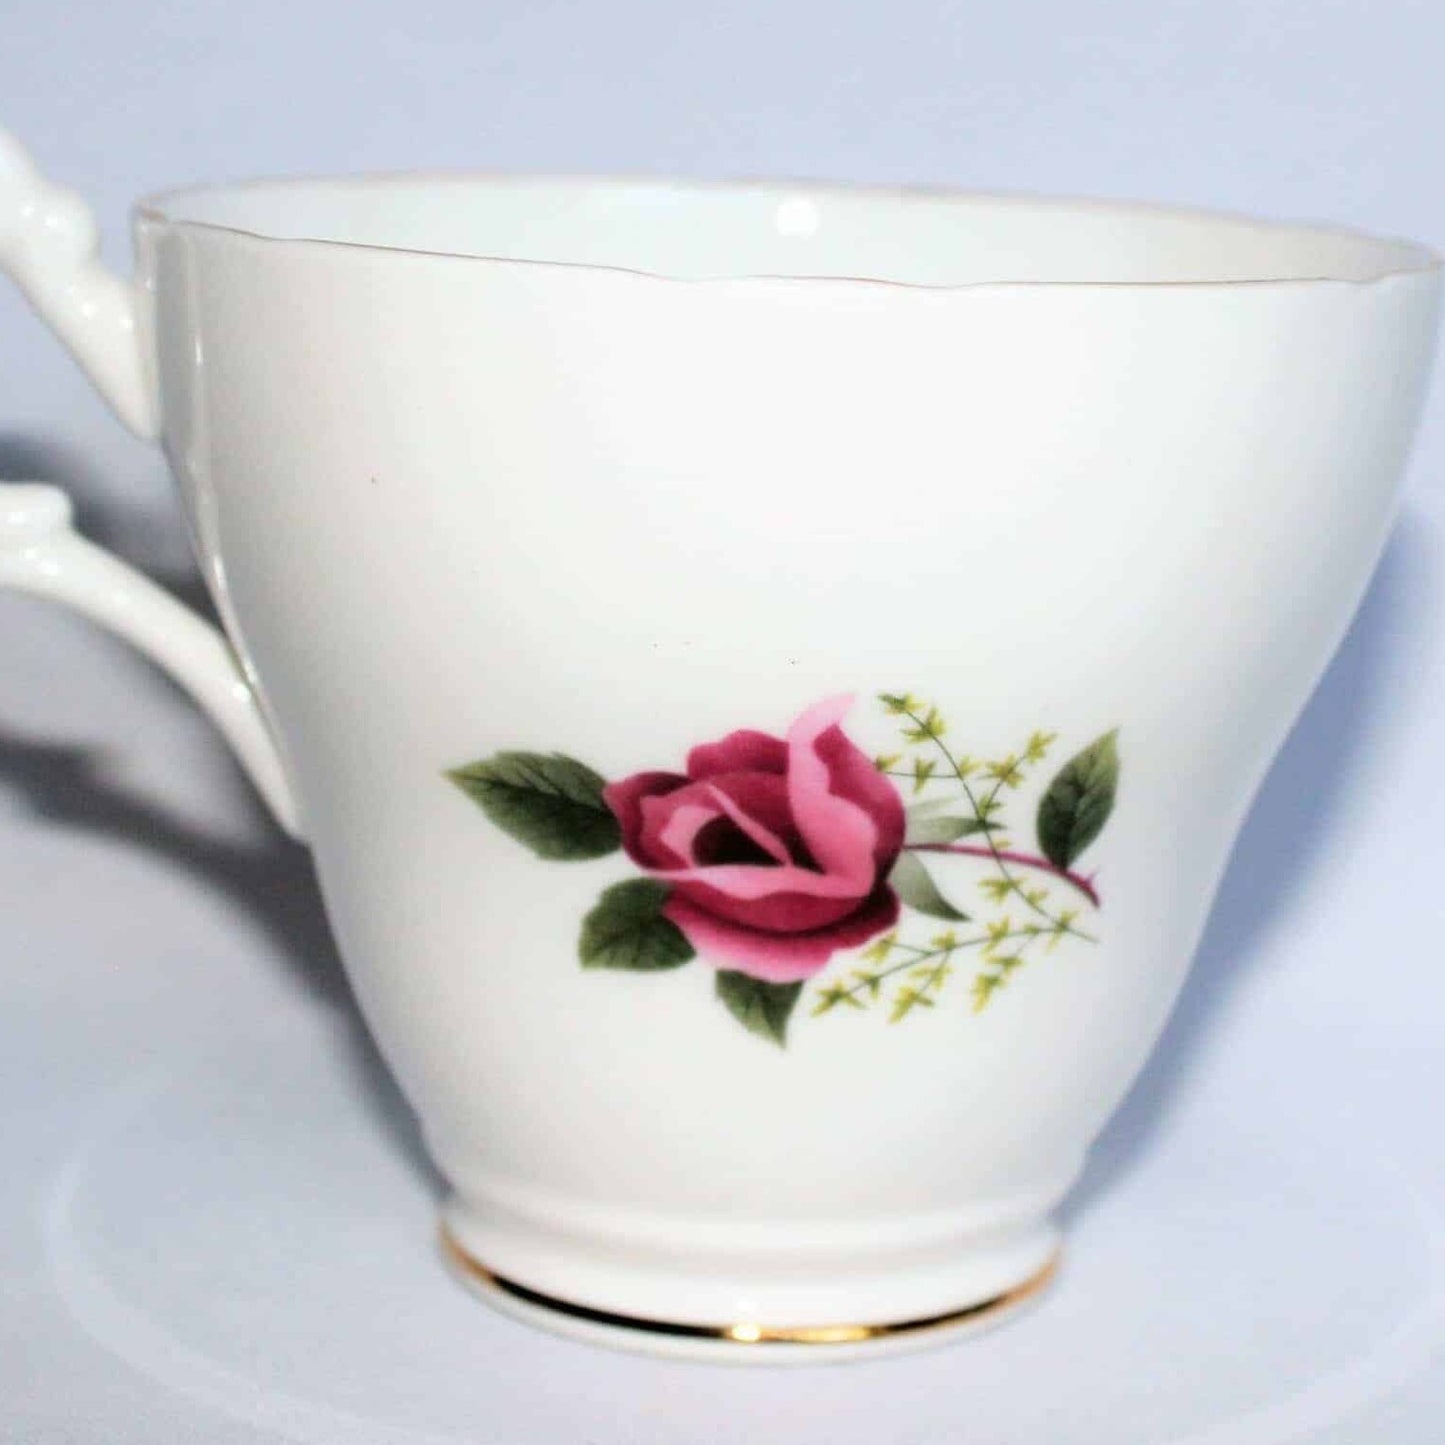 Teacup and Saucer, Royal Ascot, Pink Roses, Bone China, Vintage